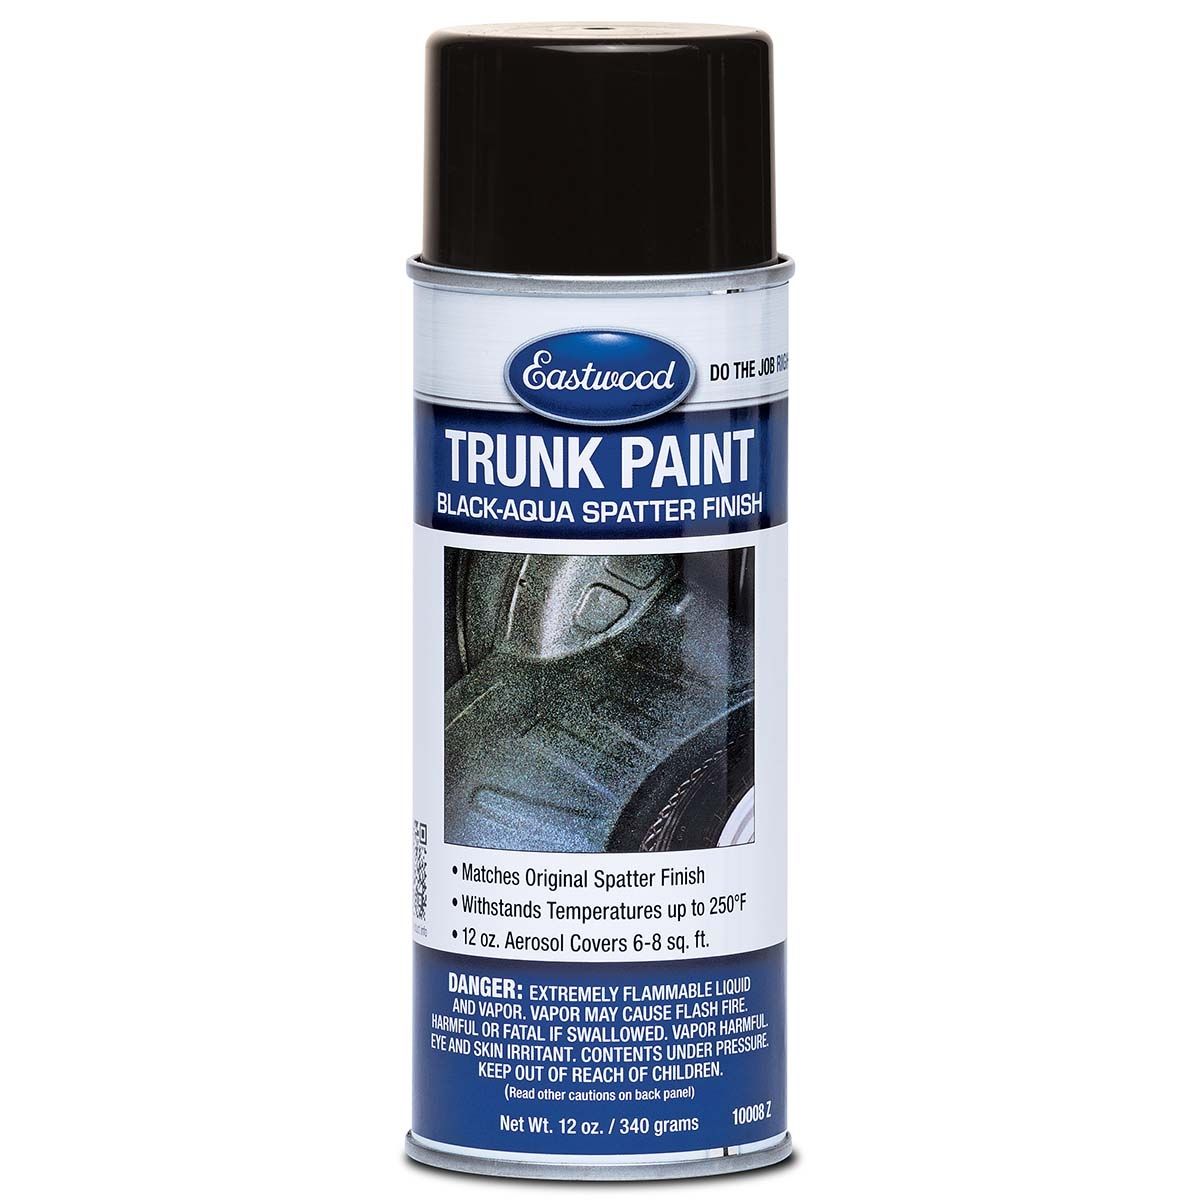 Eastwood Trunk Paint Black/Aqua Spatter Finish